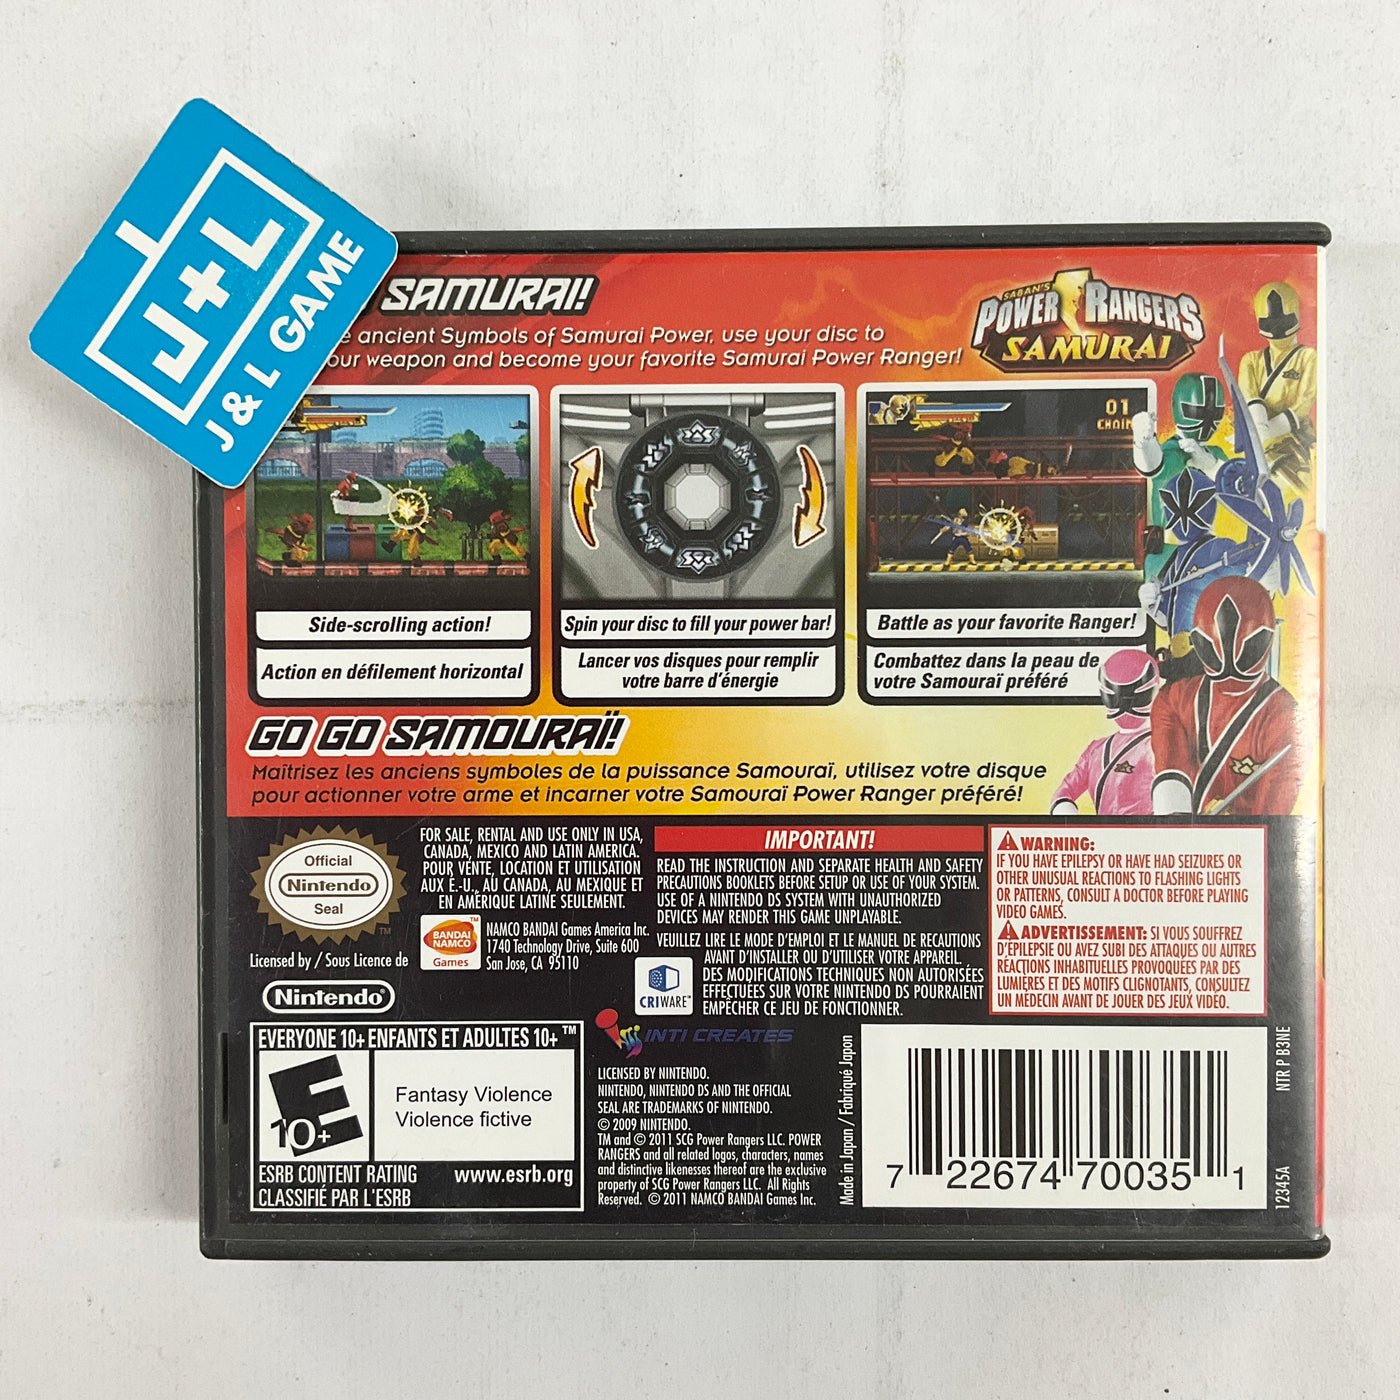 Power Rangers Samurai - (NDS) Nintendo DS [Pre-Owned] Video Games Namco Bandai Games   